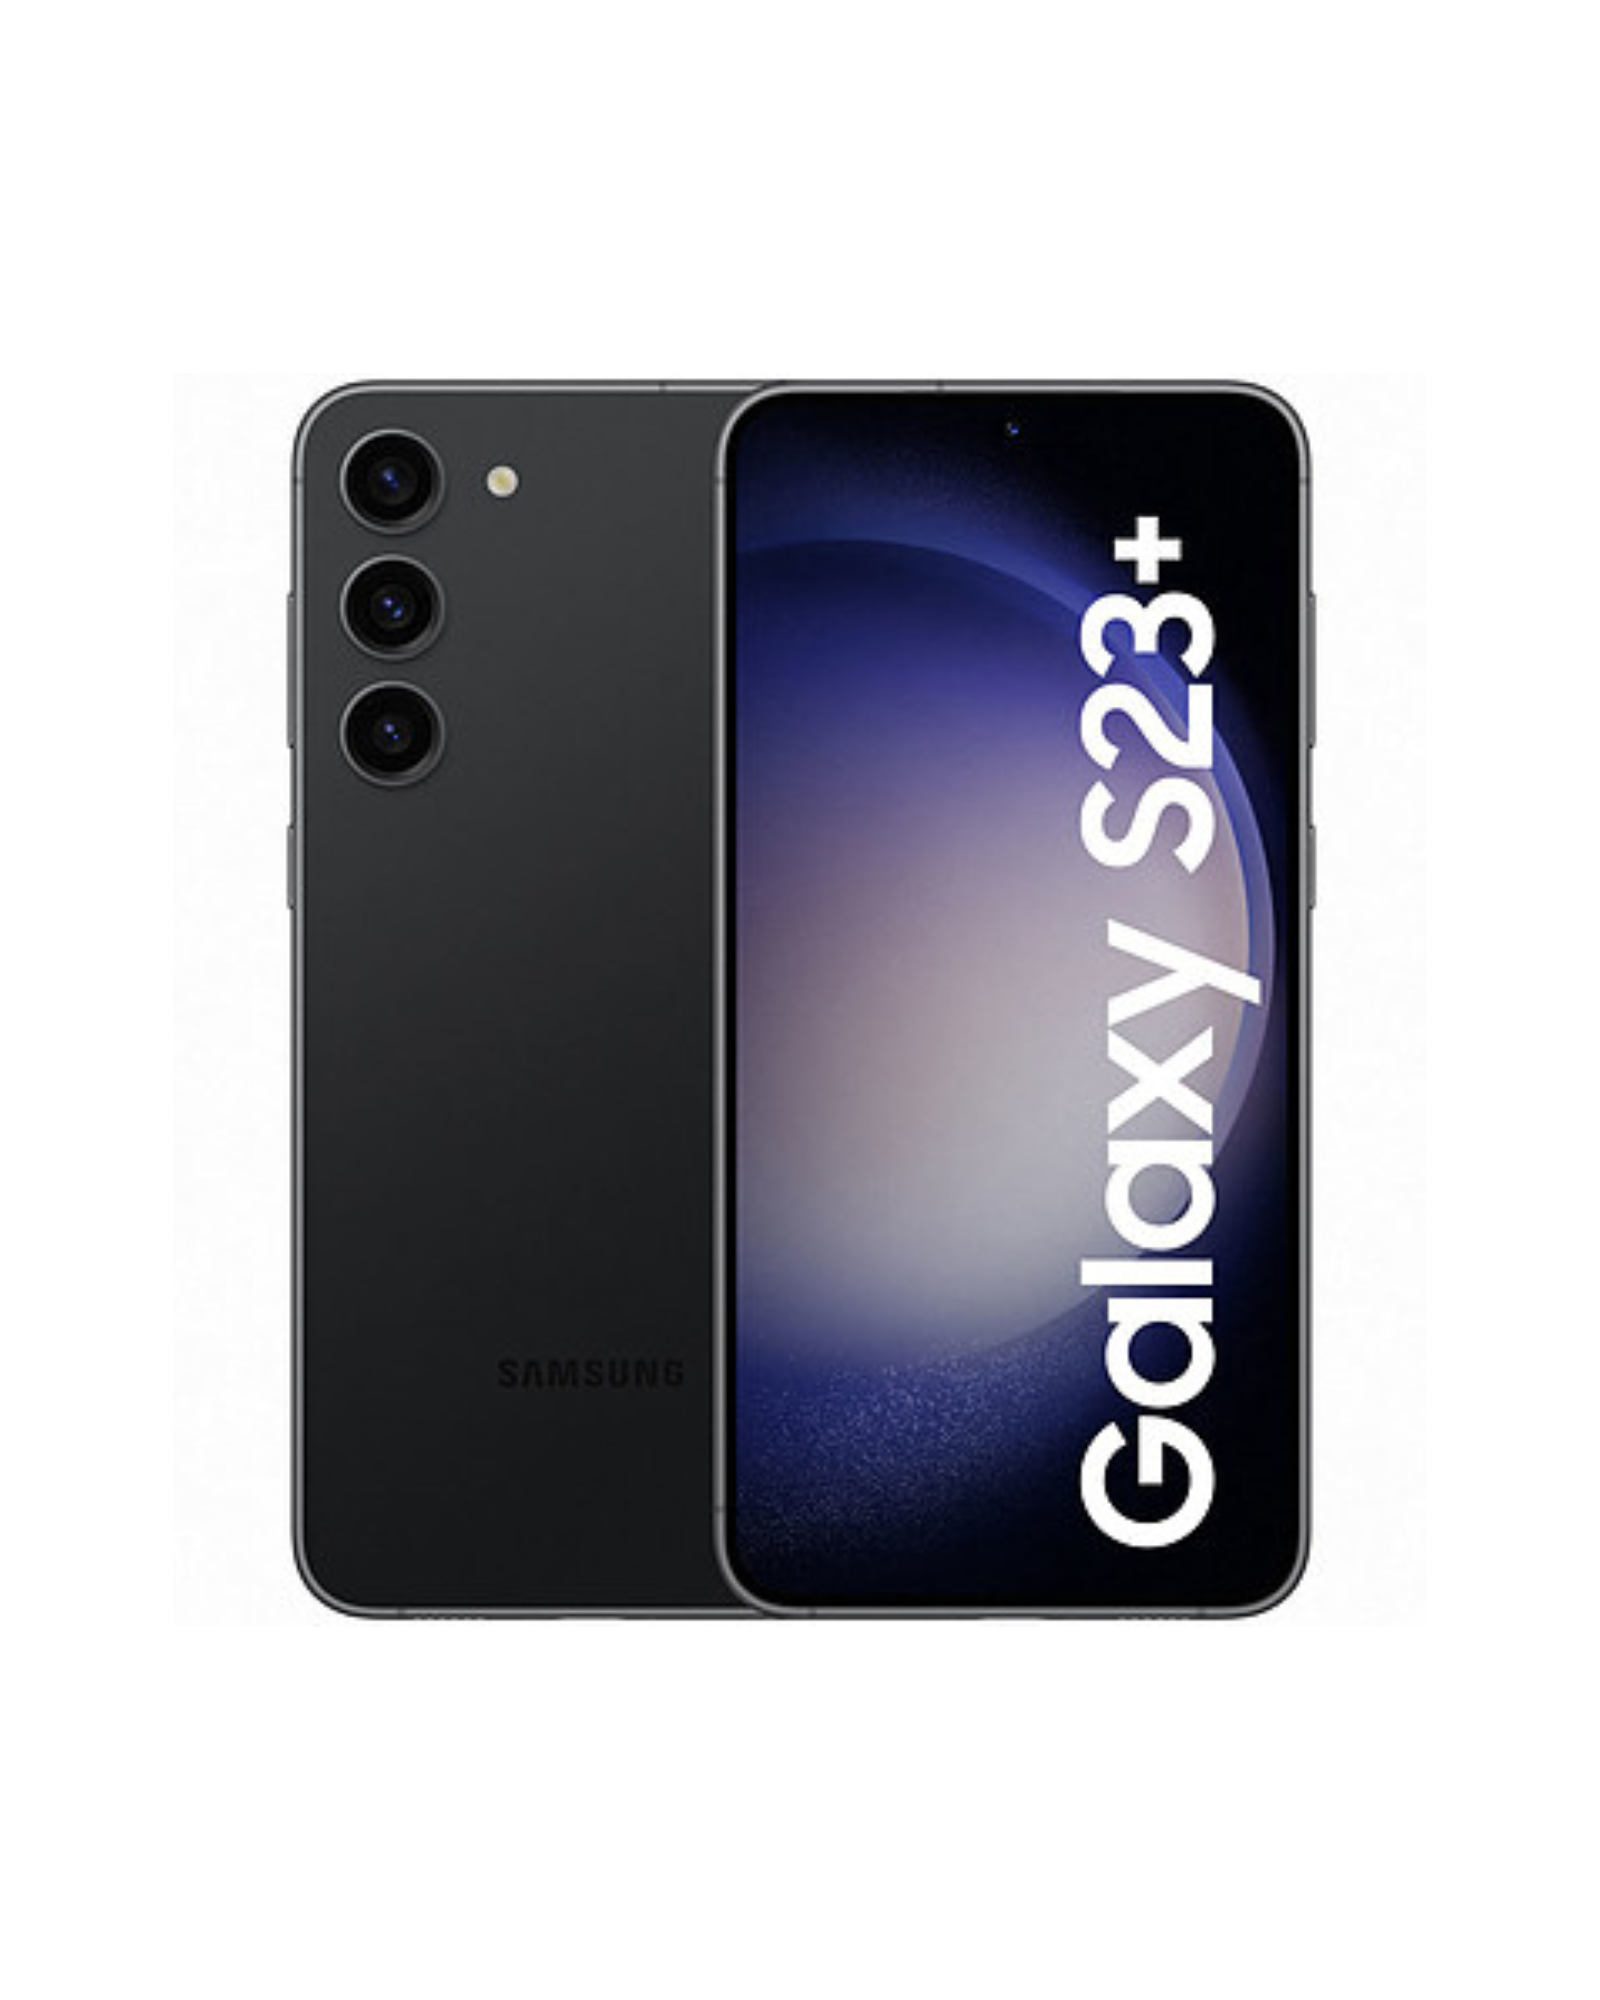 Smartphone Samsung Galaxy S23+ - 12Go/256Go -  Maroc